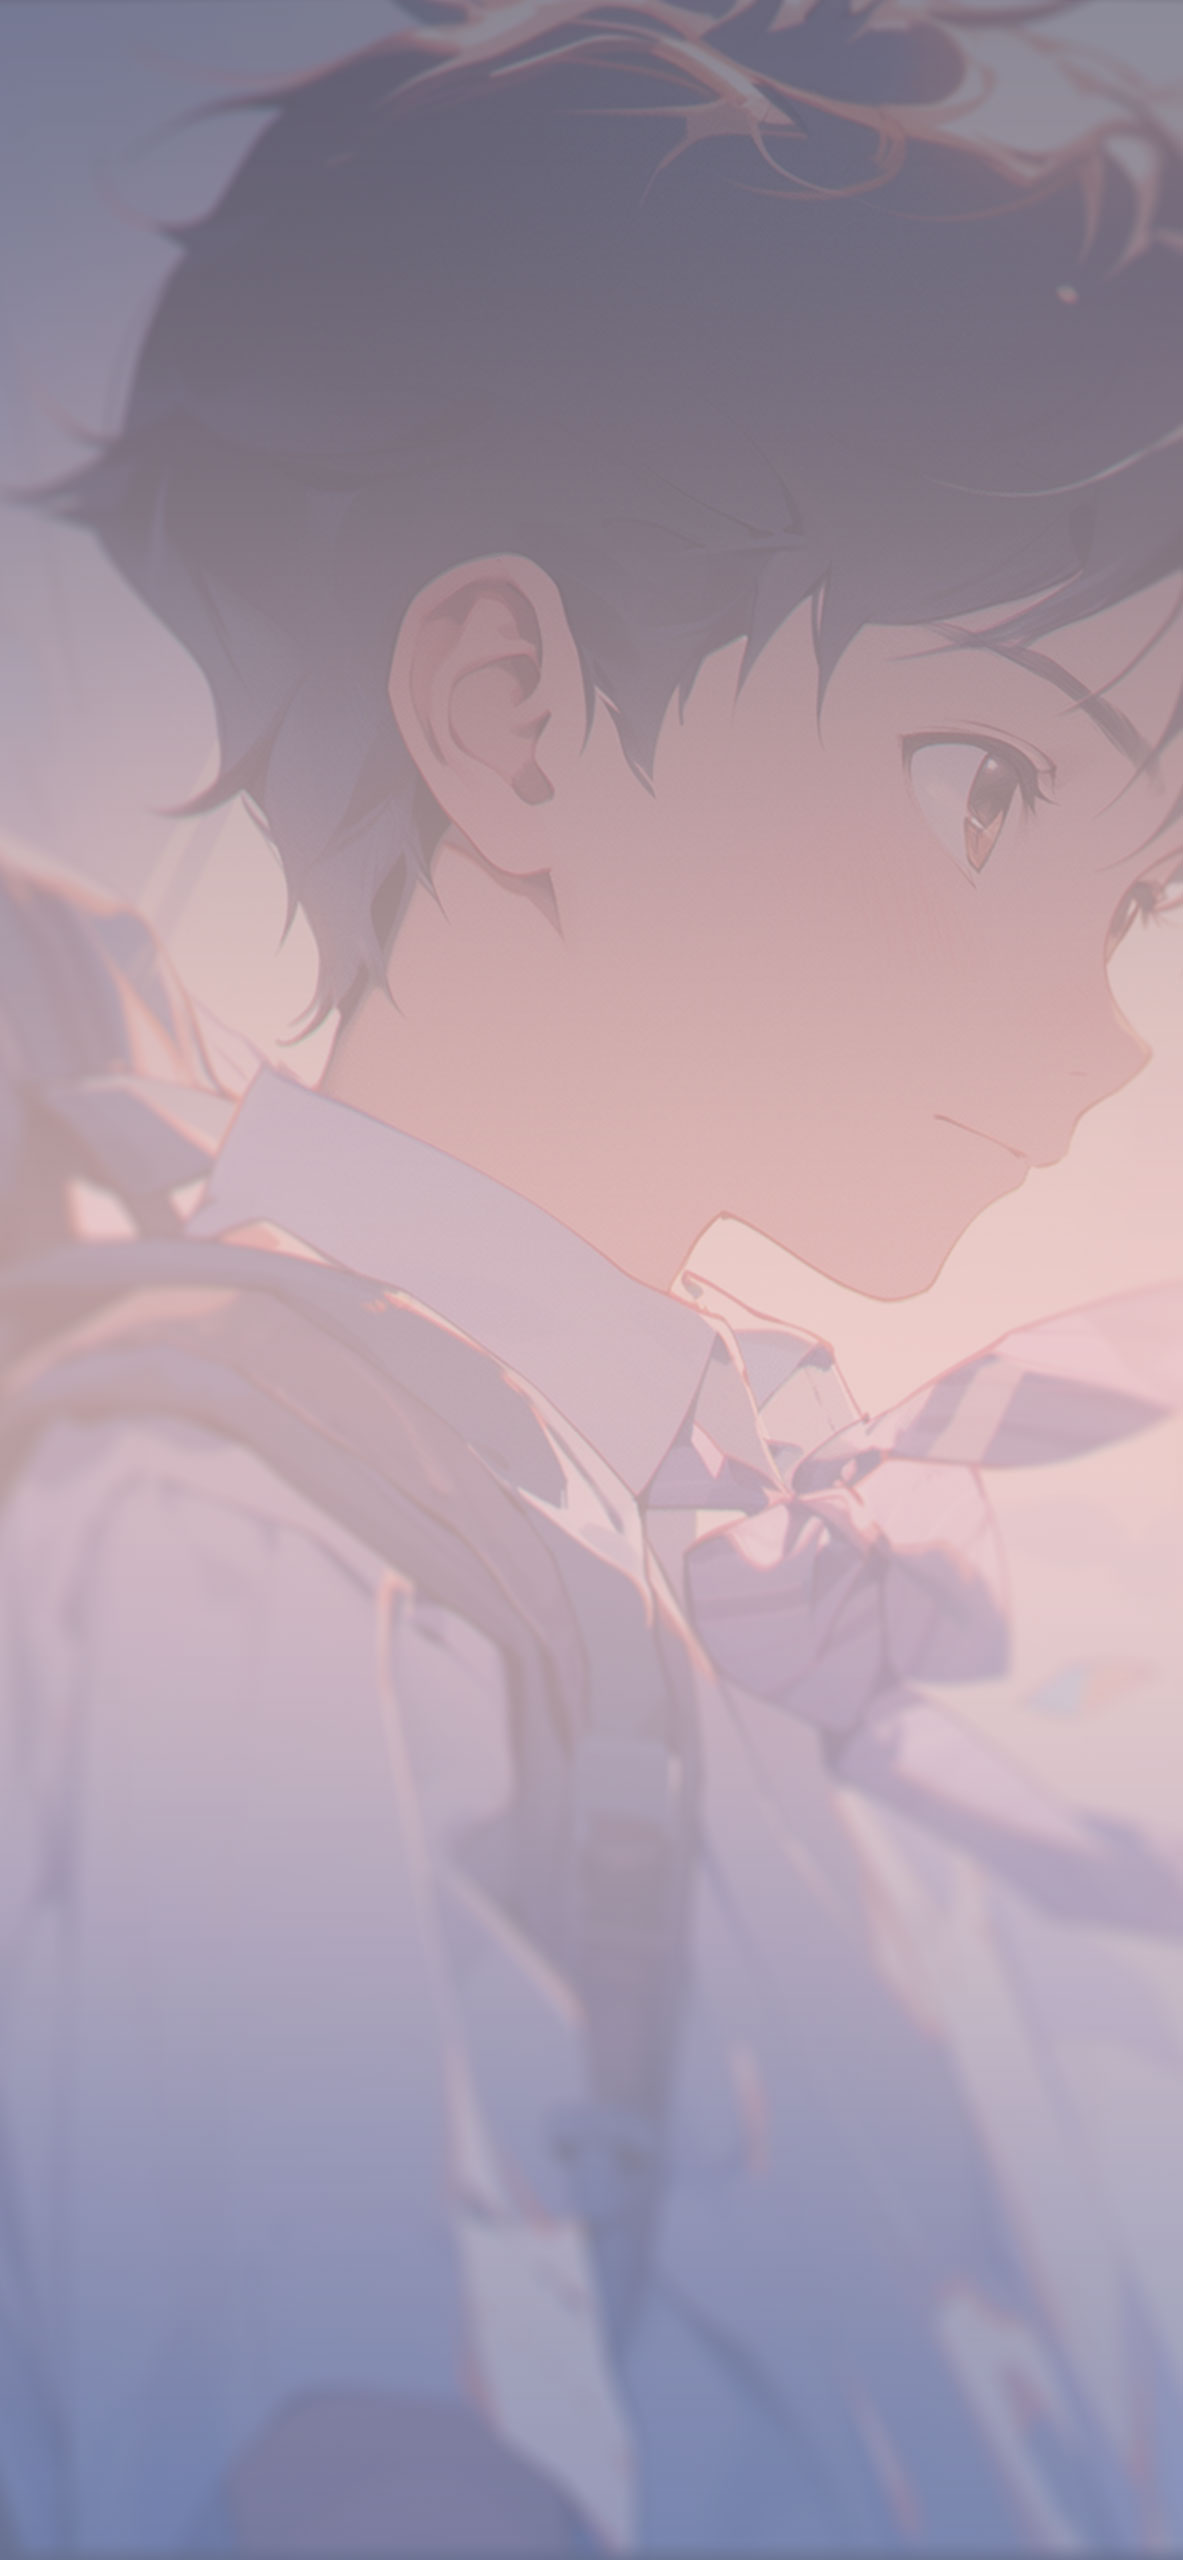 Shinju Inui ♡ | Aesthetic Anime icon | Aesthetic anime, Anime, Anime icons